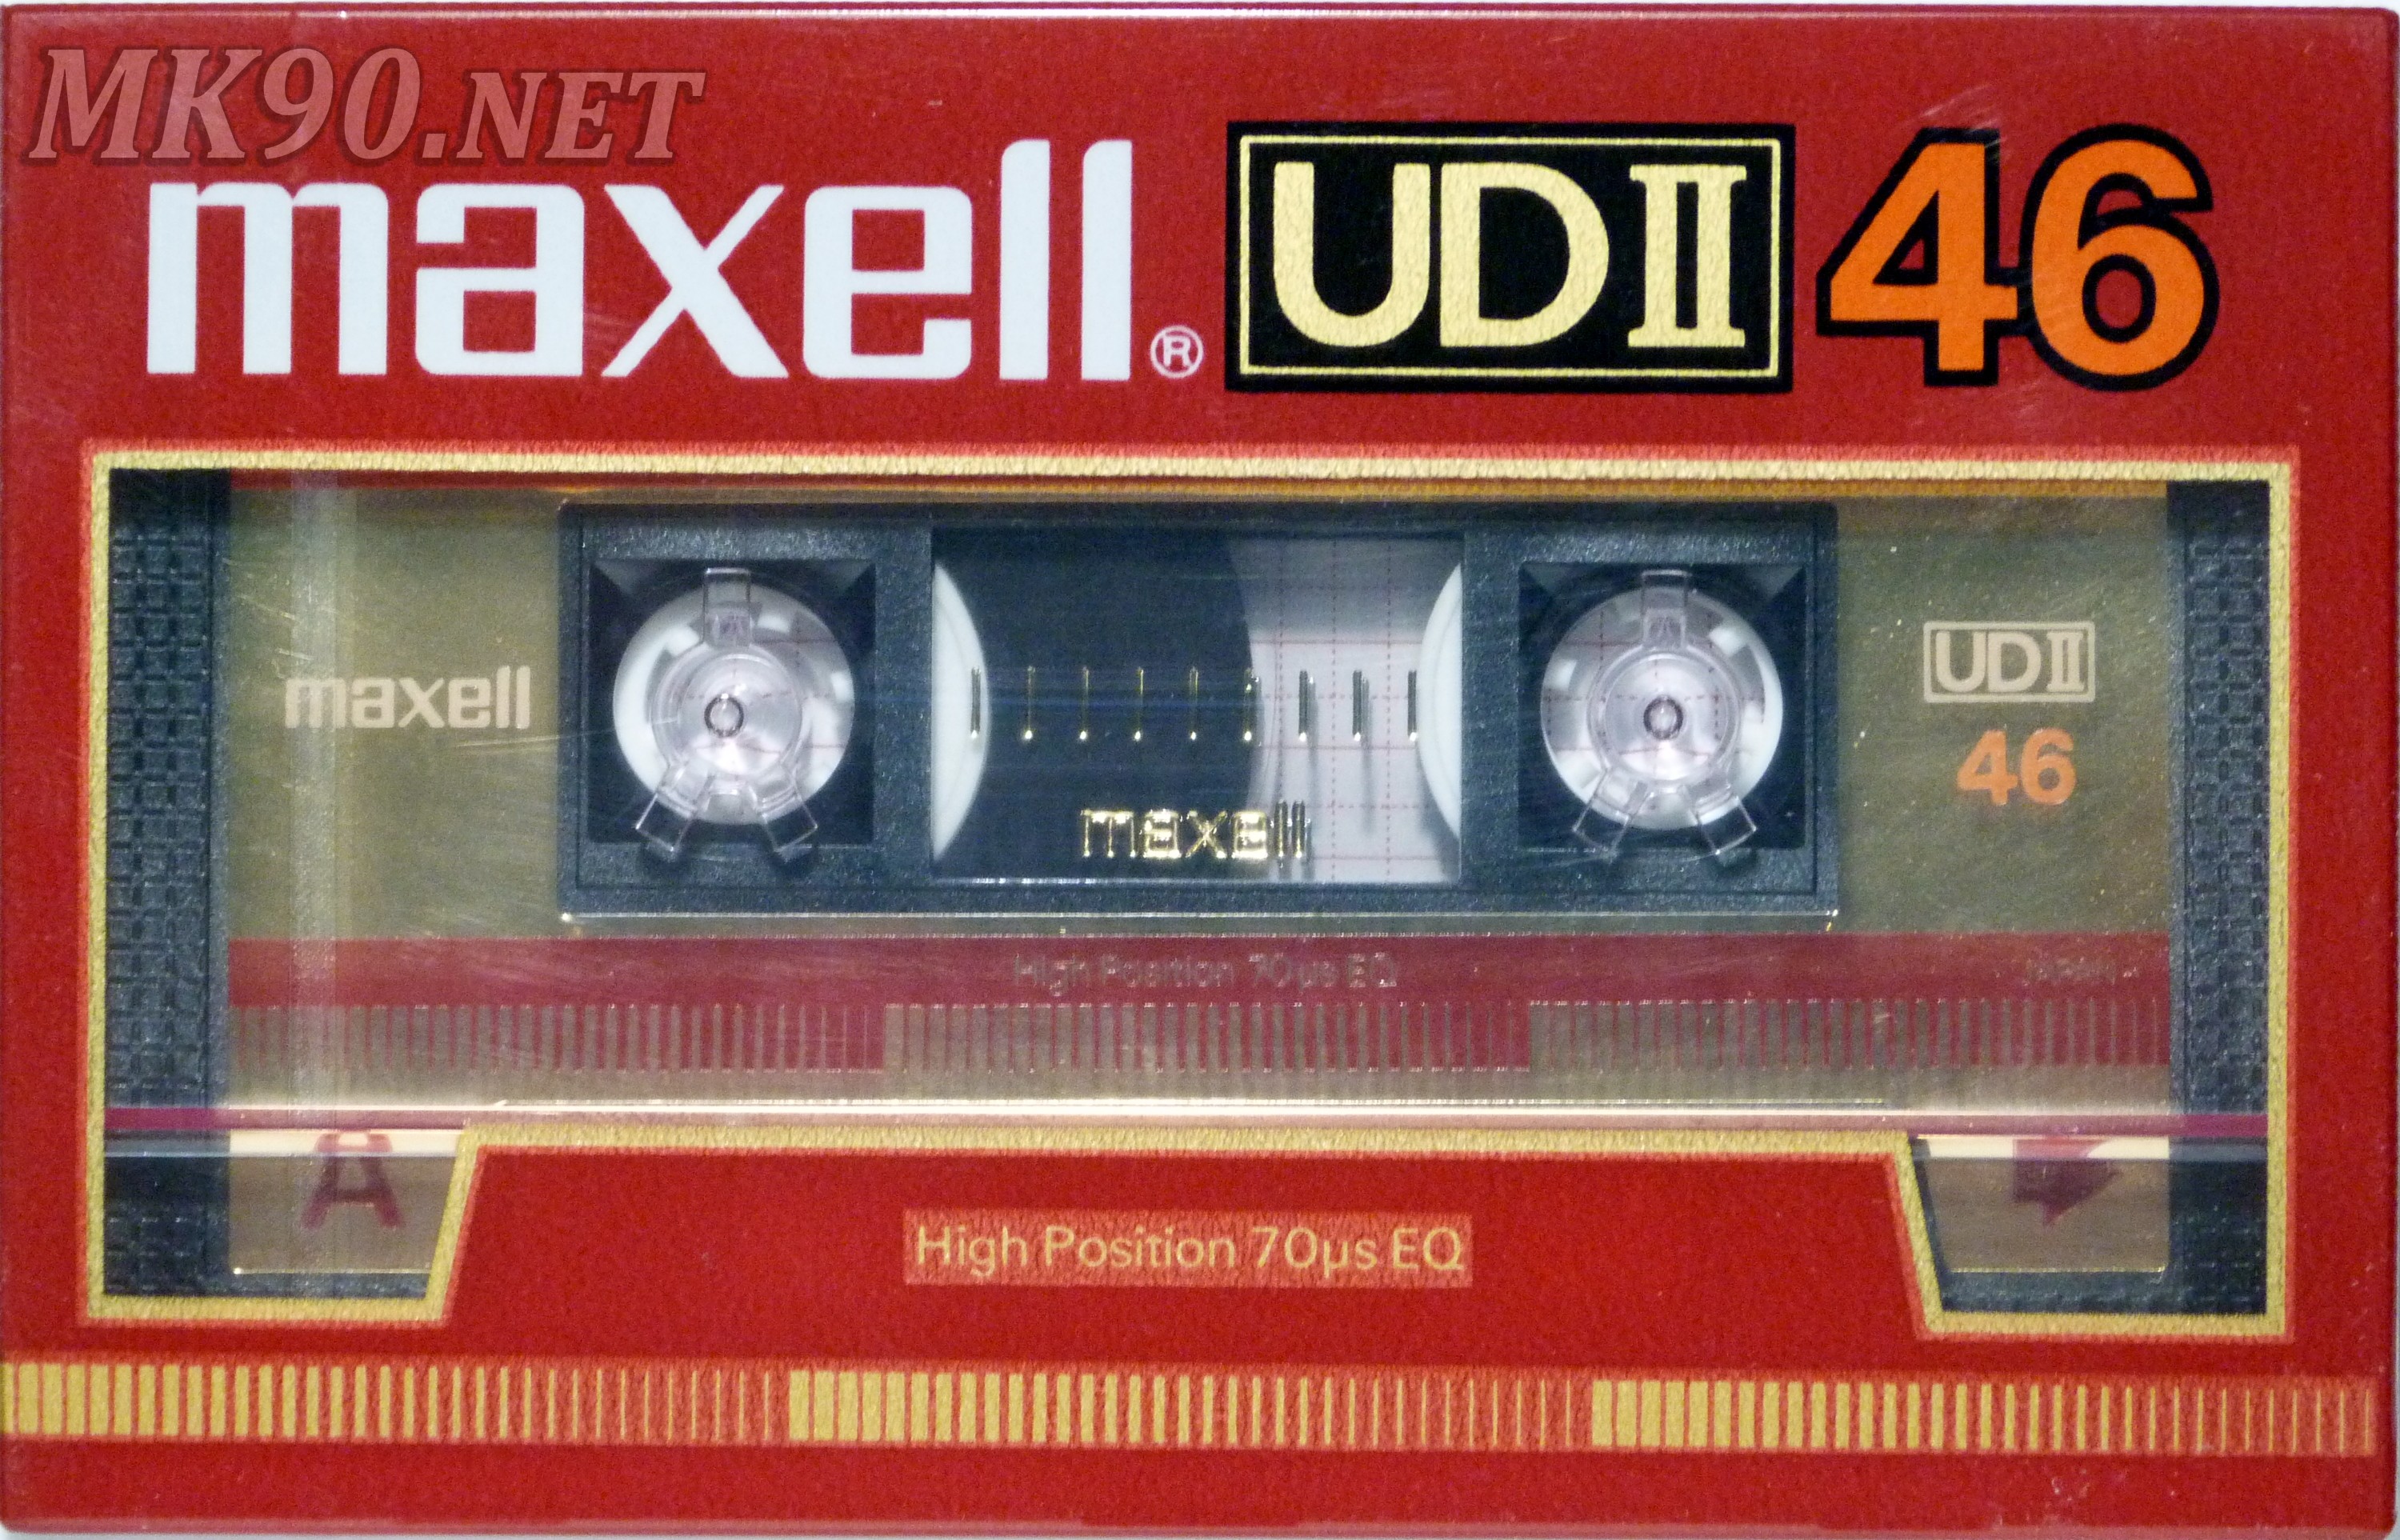 Maxell UDII 46 Jp 1985-87